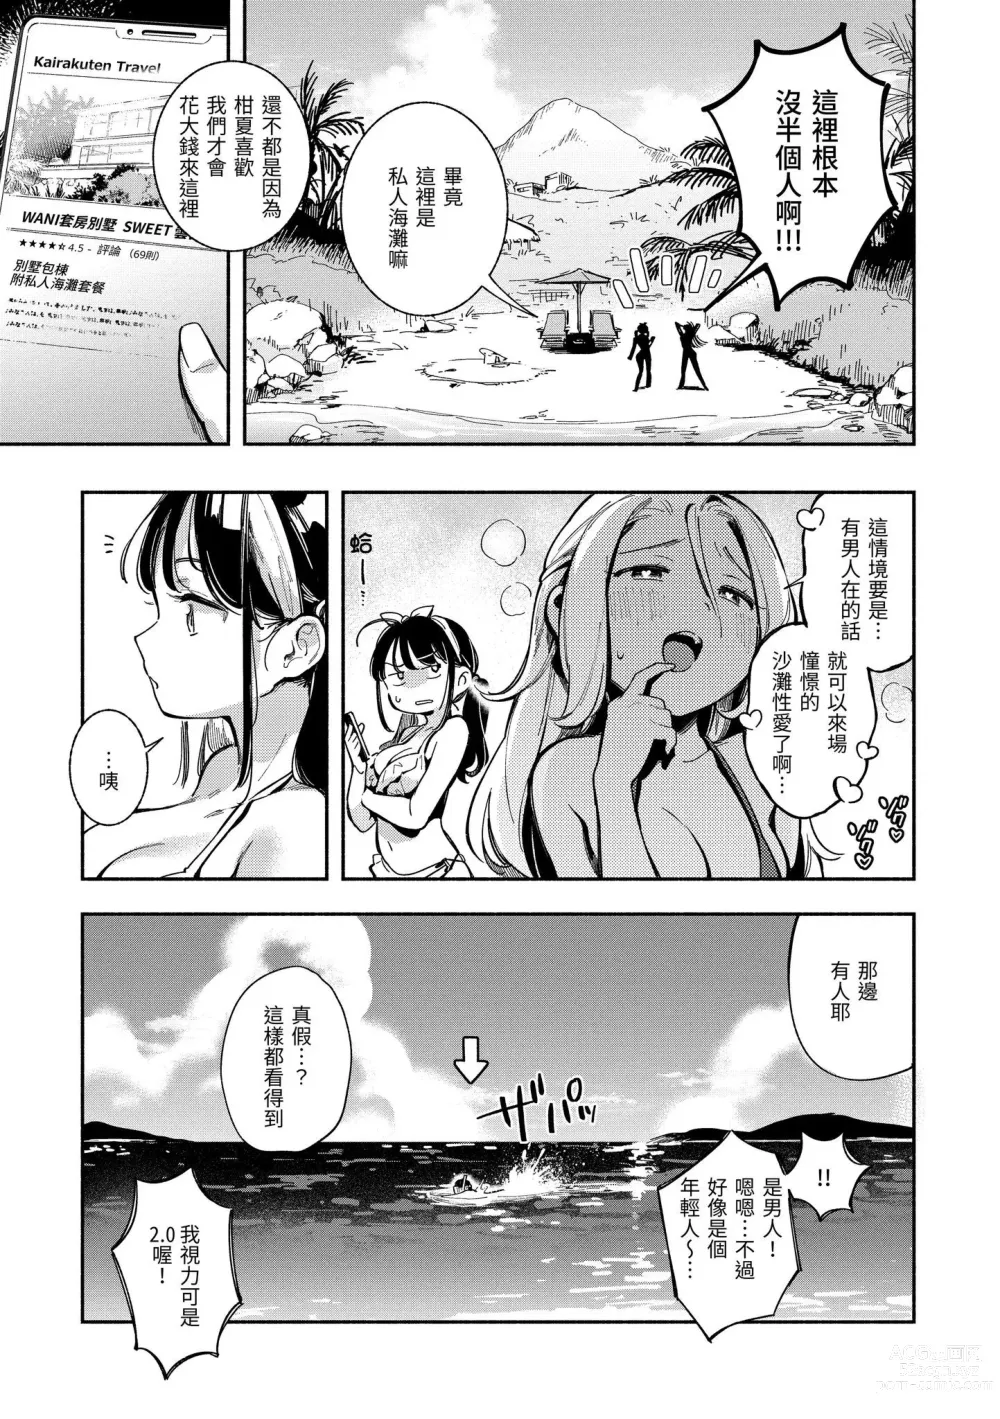 Page 6 of manga 謝謝招待 (decensored)